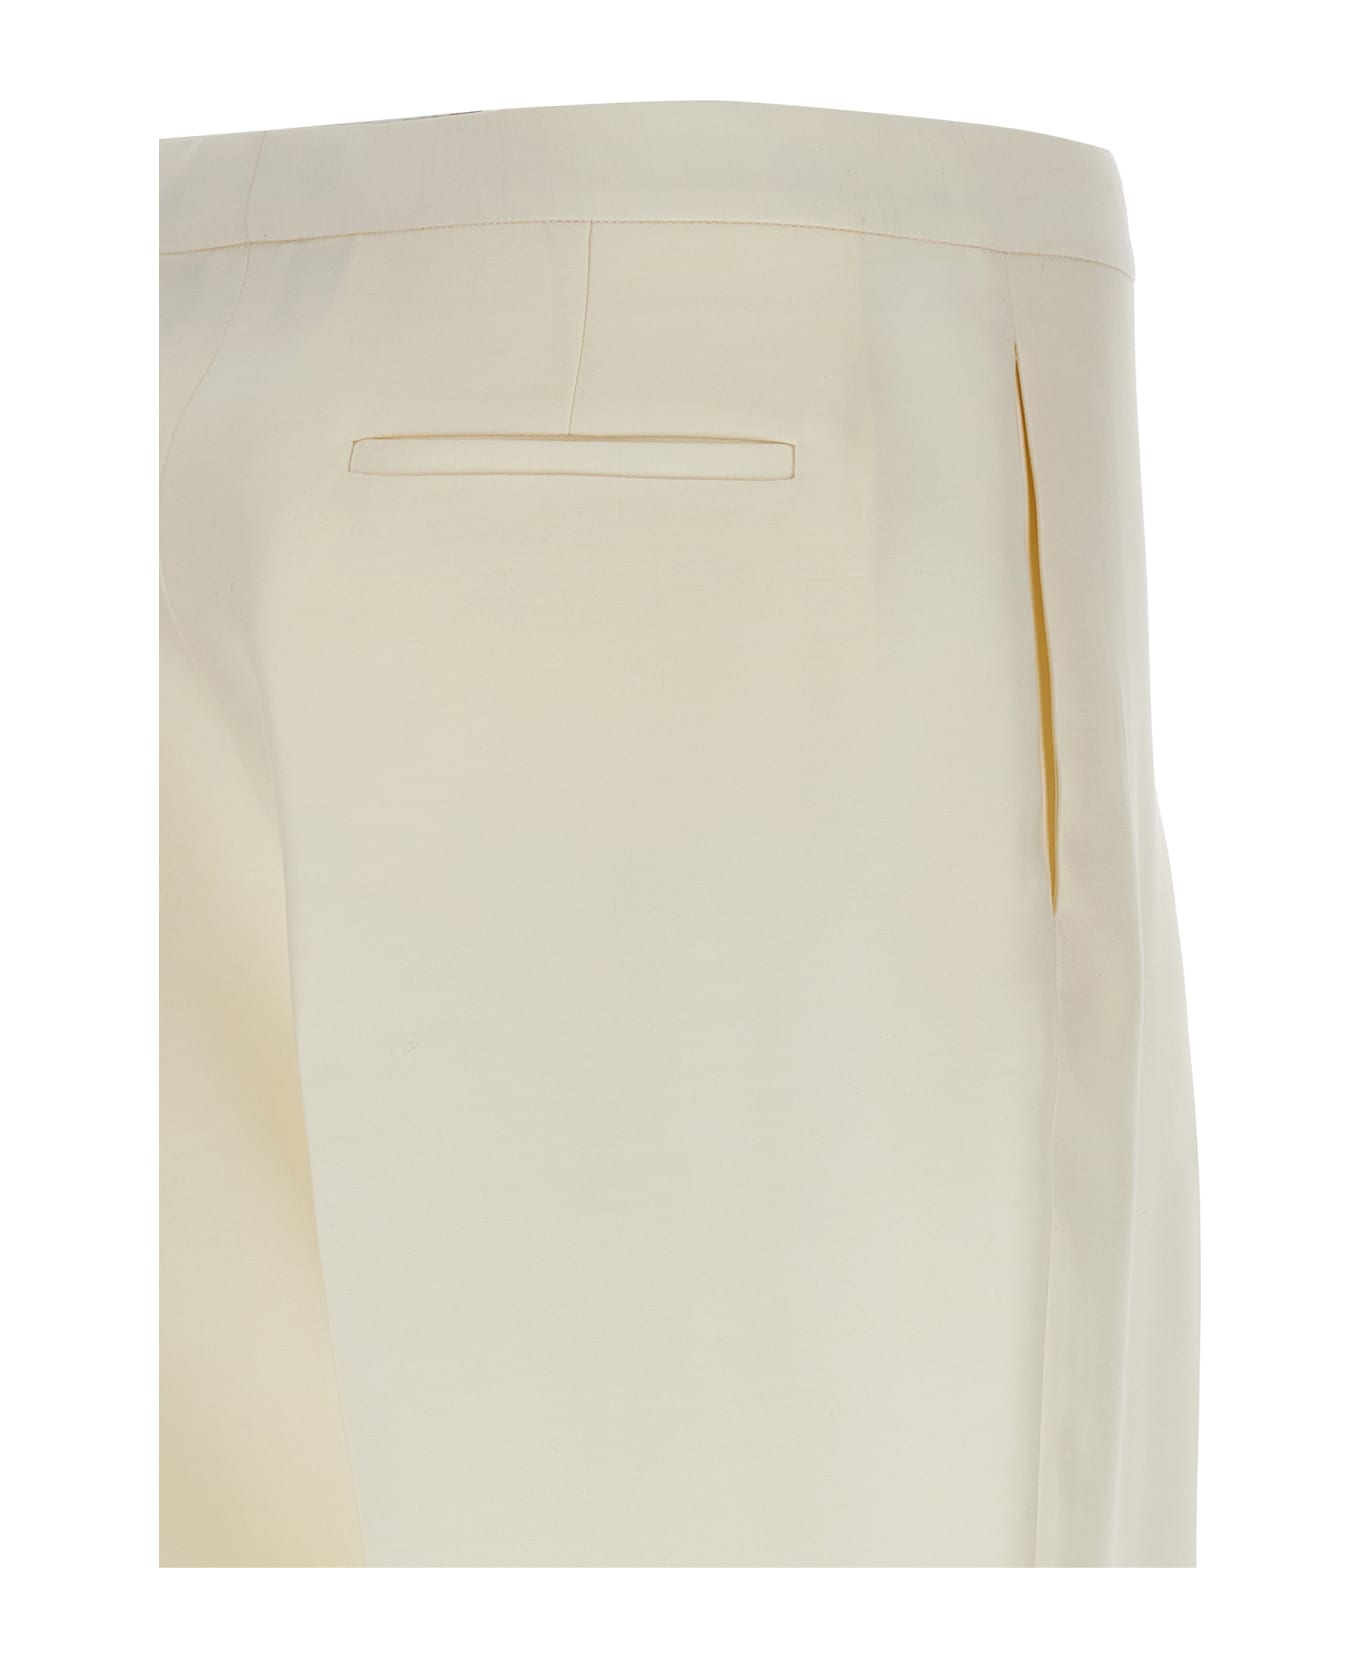 Fabiana Filippi Tailored Trousers - White